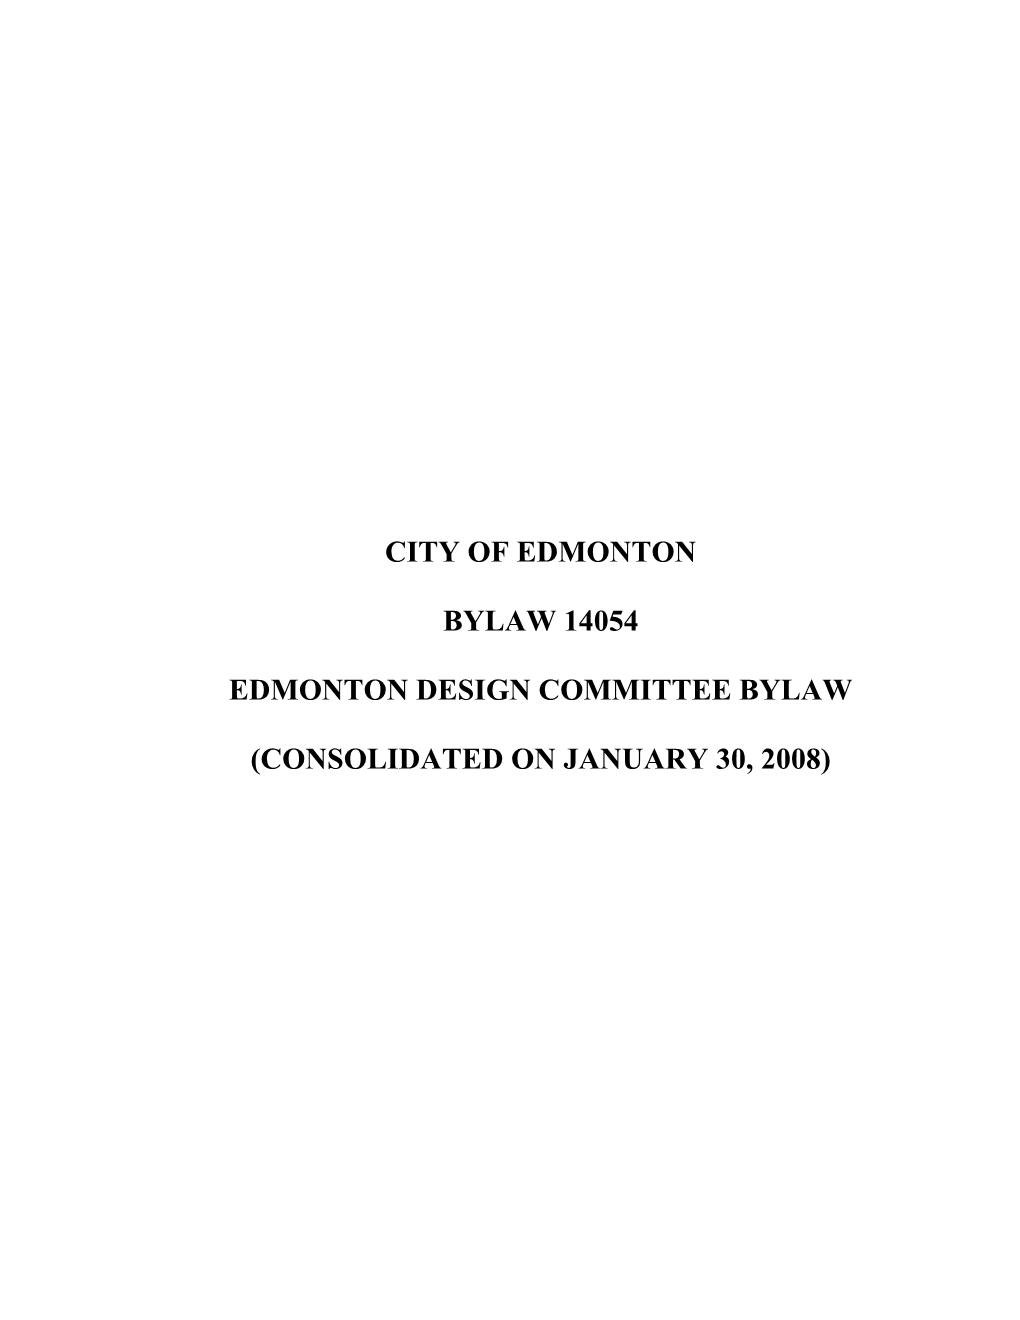 Edmonton Design Committee Bylaw 14054